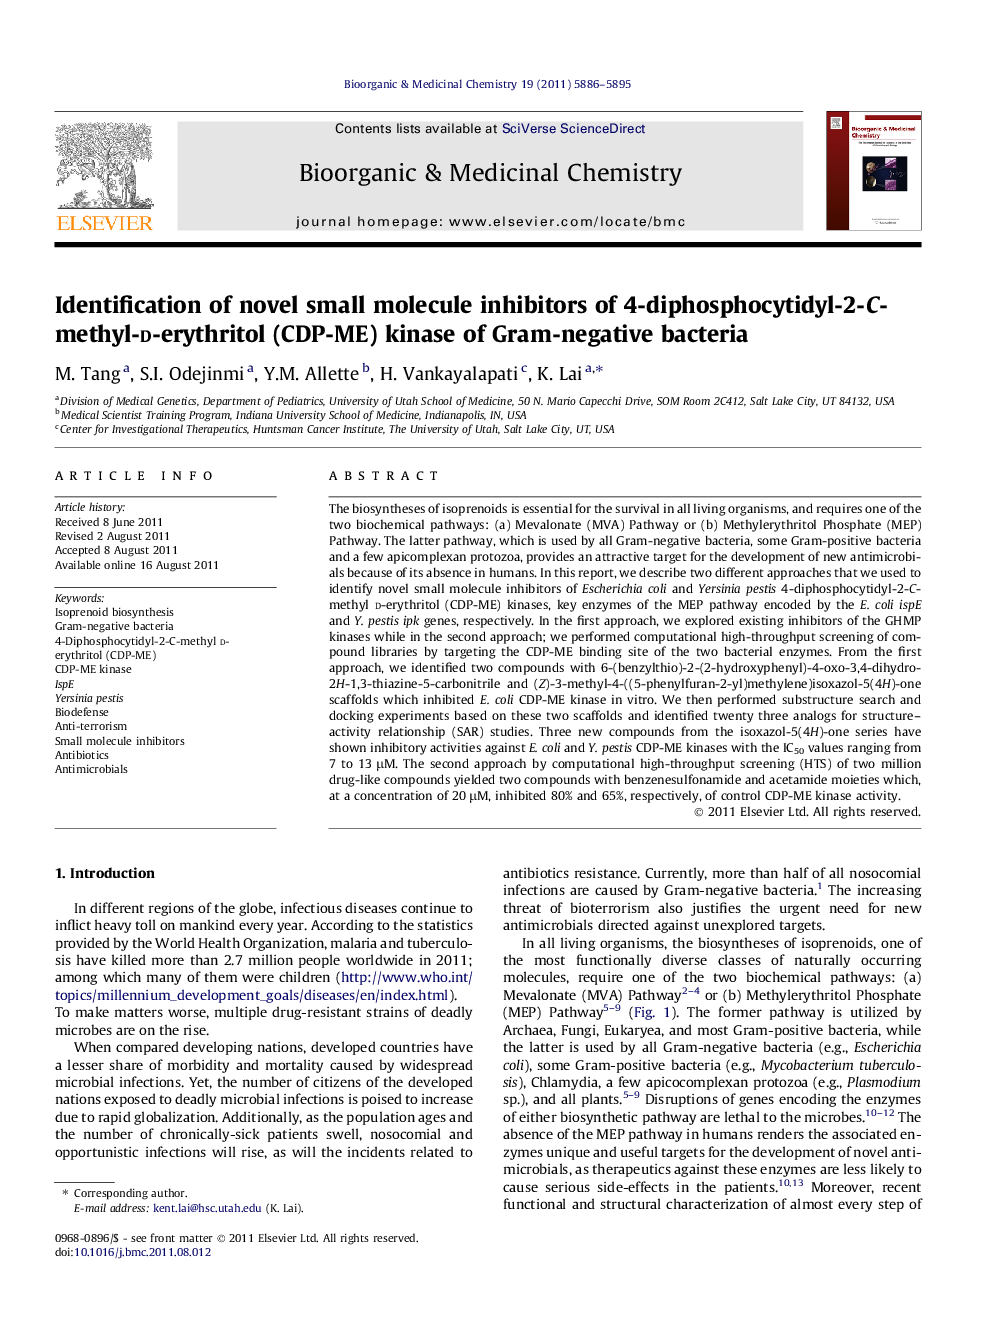 Identification of novel small molecule inhibitors of 4-diphosphocytidyl-2-C-methyl-d-erythritol (CDP-ME) kinase of Gram-negative bacteria